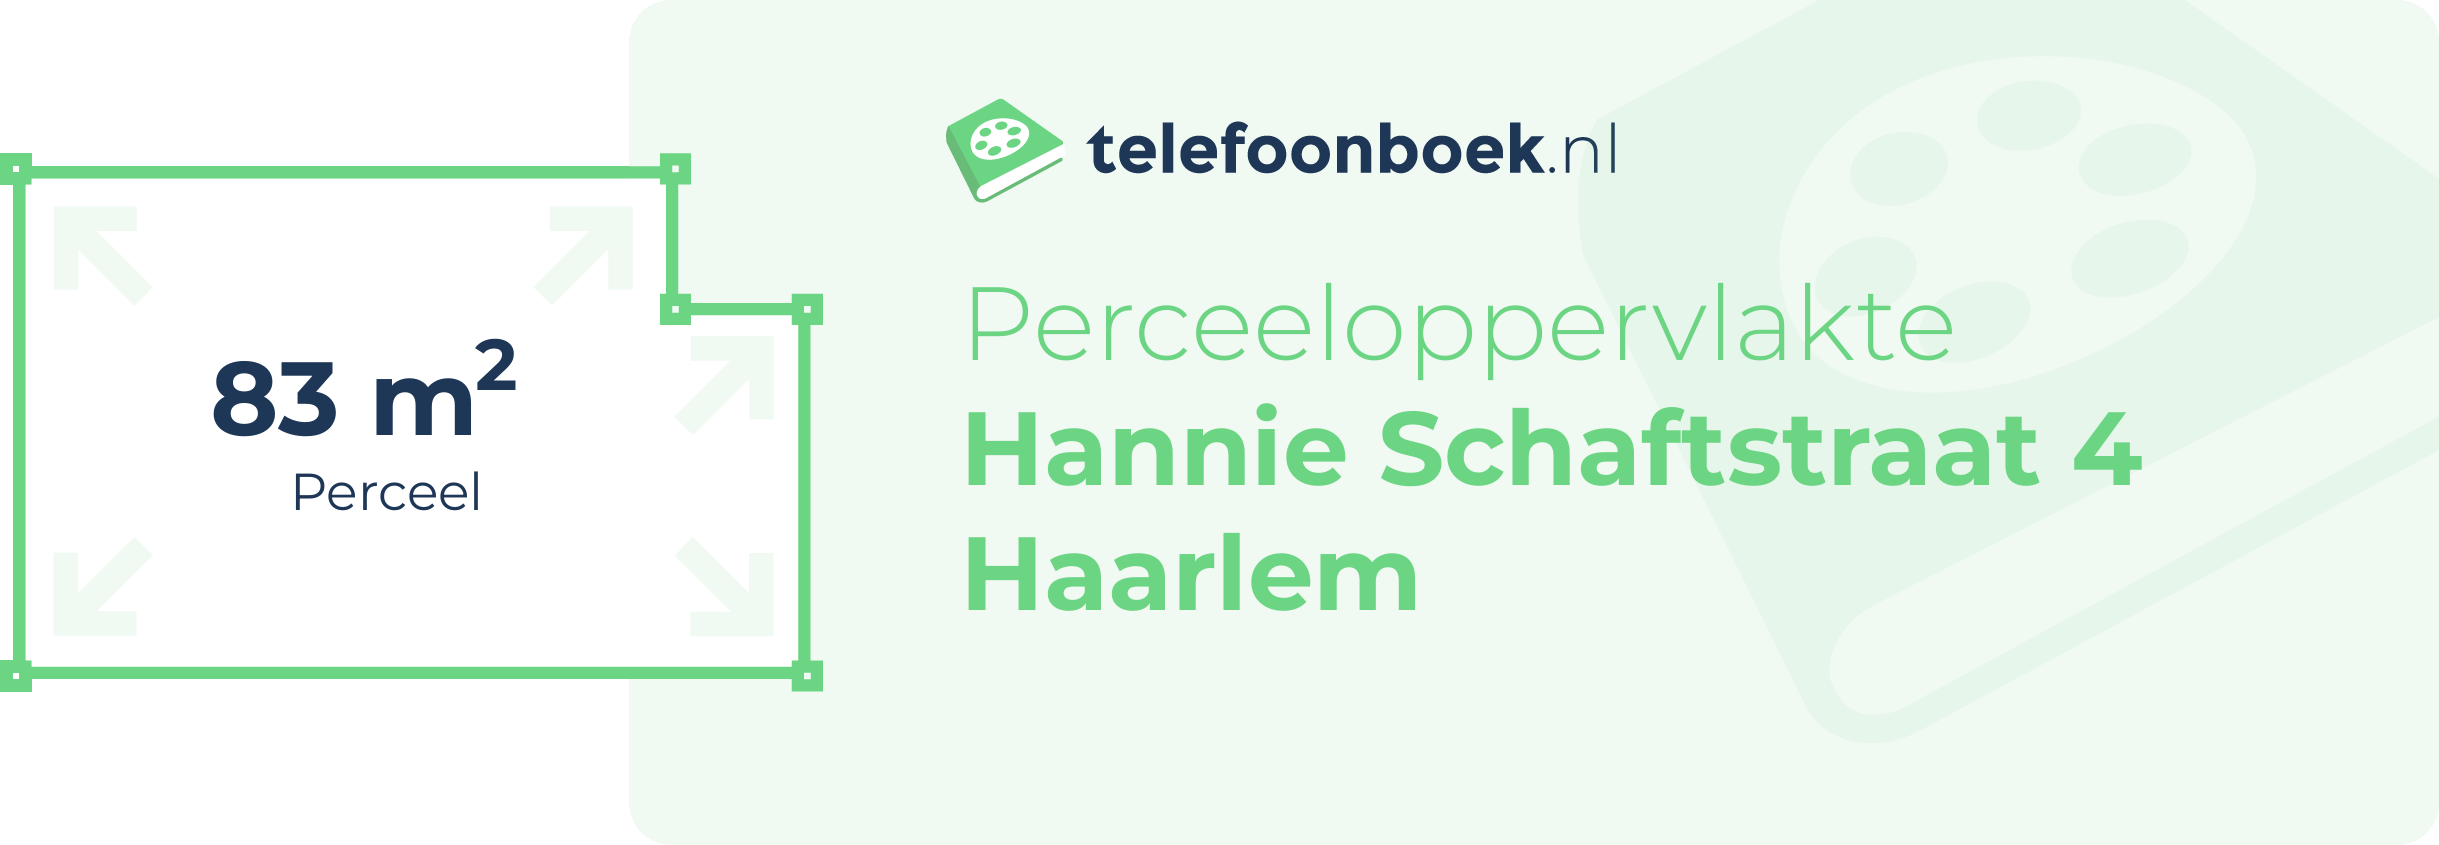 Perceeloppervlakte Hannie Schaftstraat 4 Haarlem